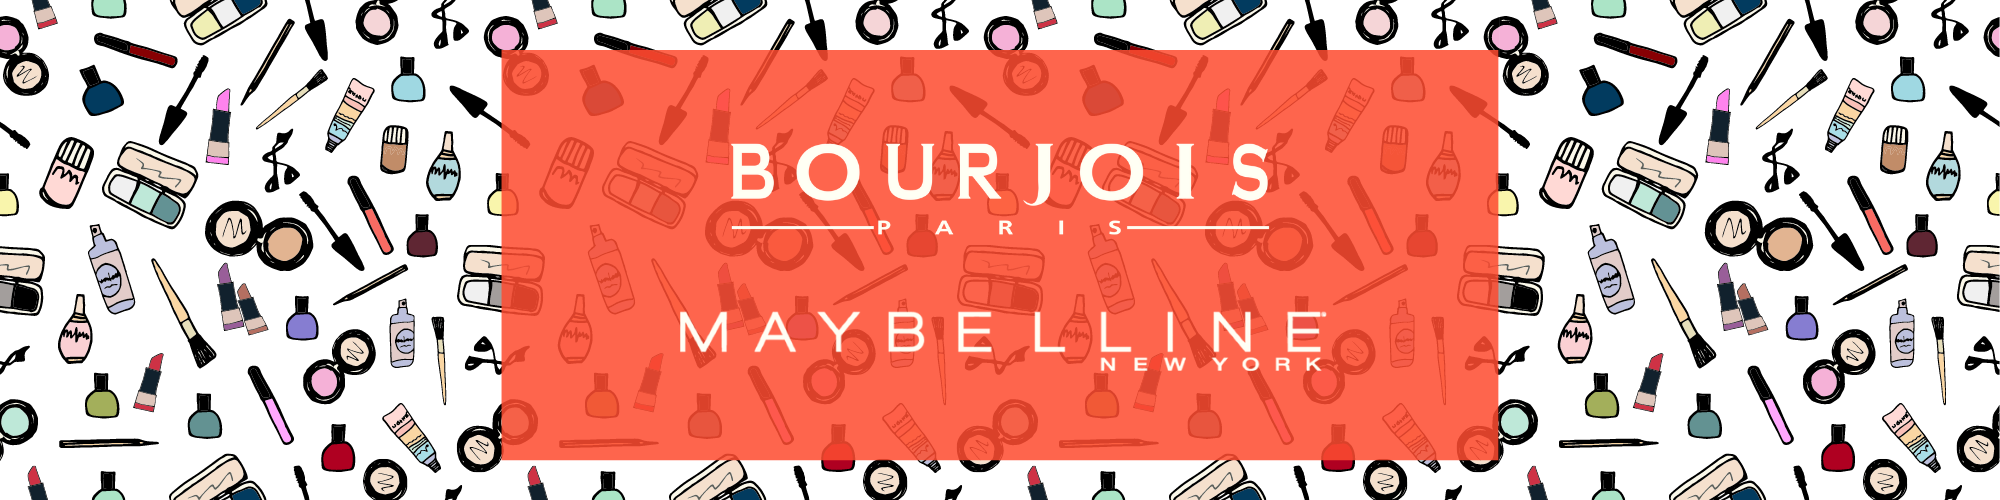 Bourjois & Maybeline